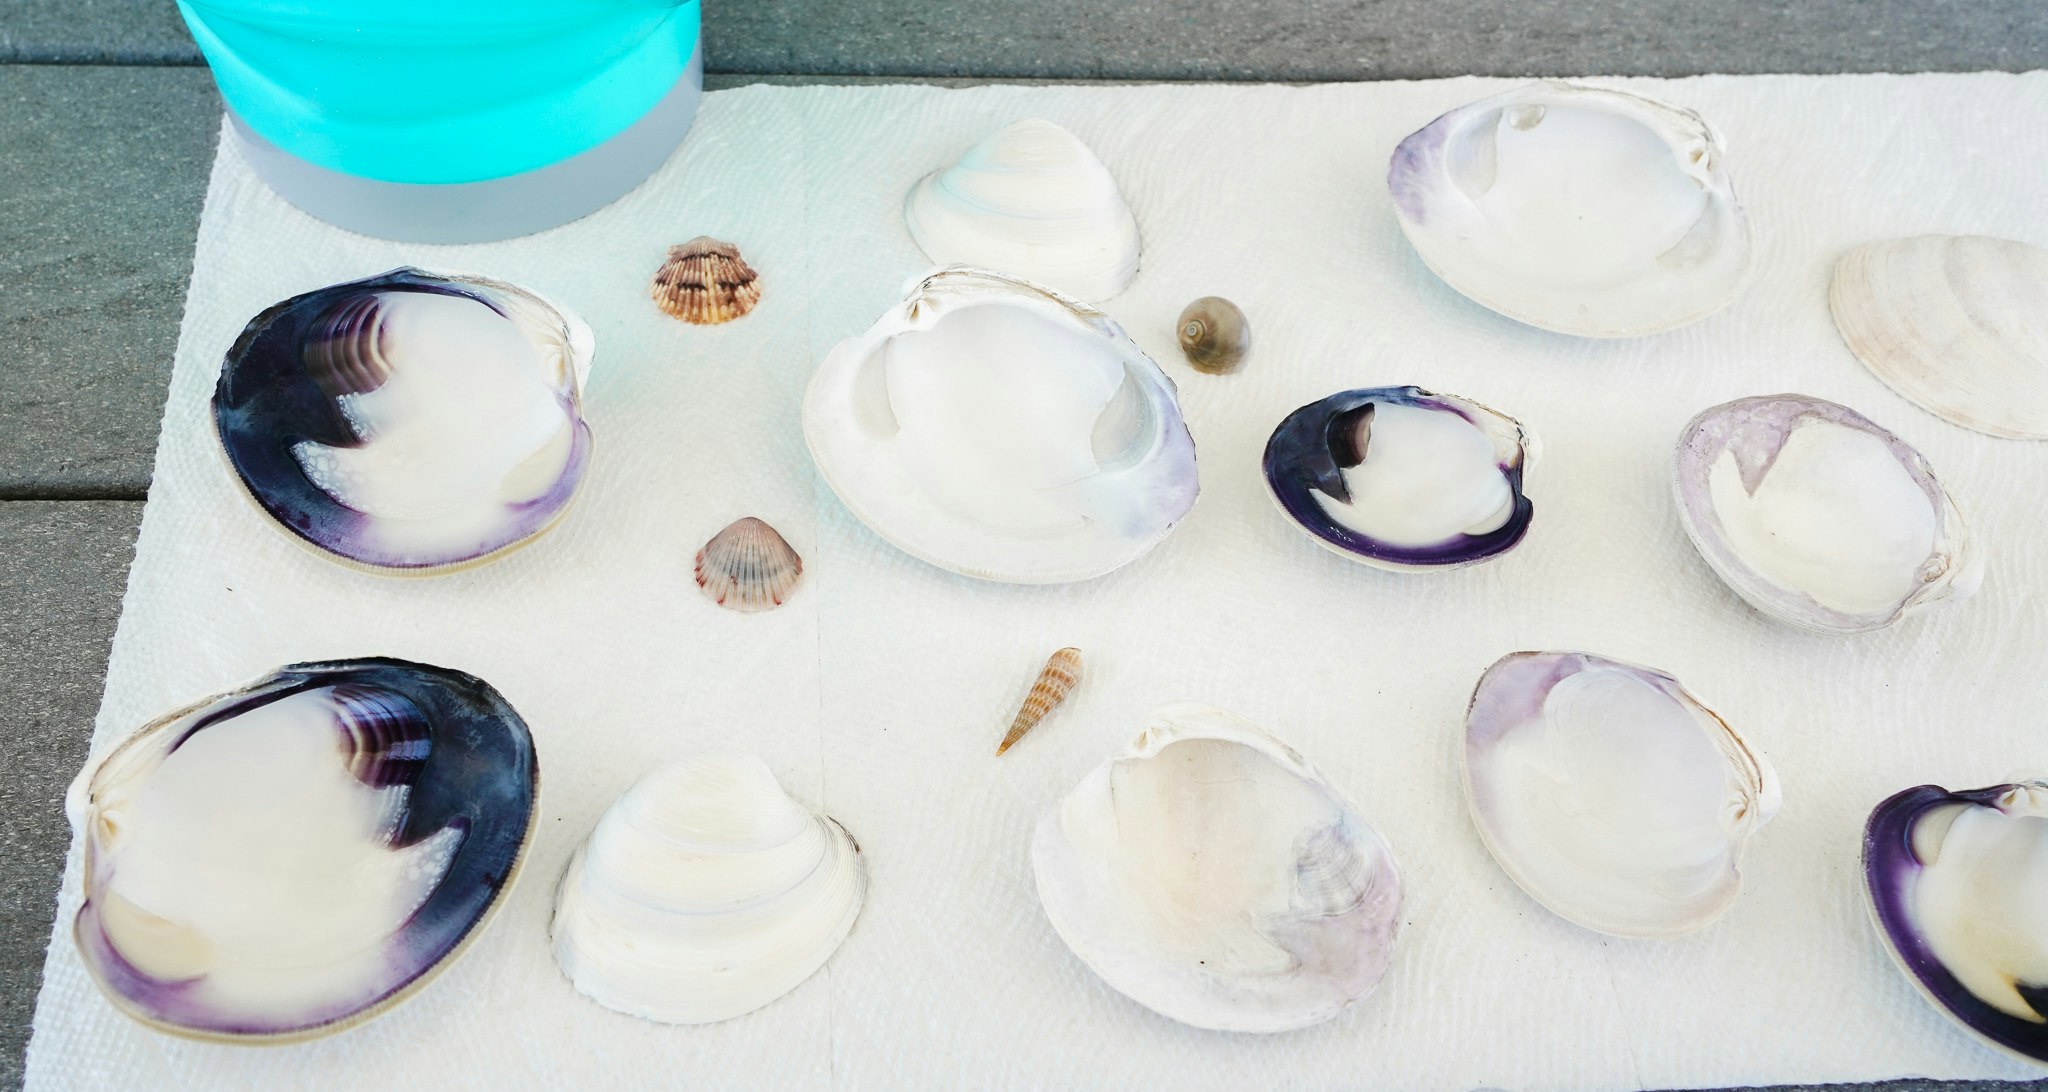 How To Clean Seashells